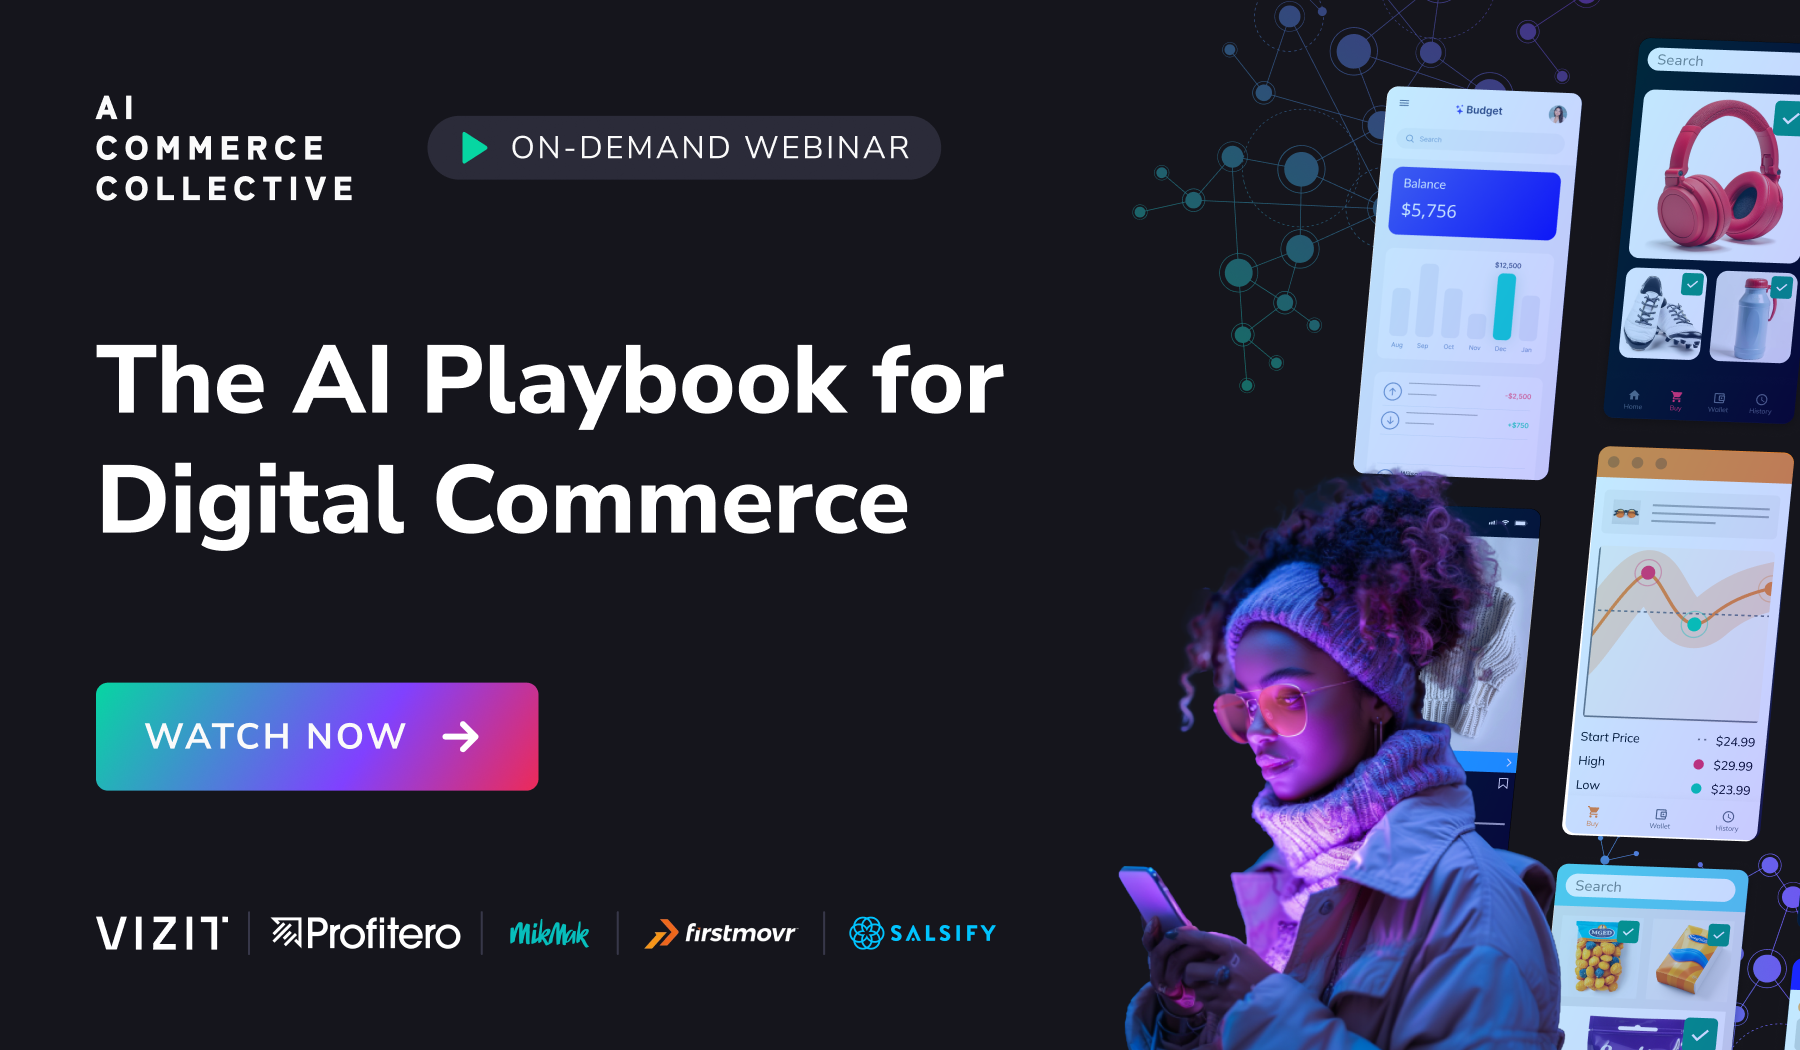 The AI Playbook for Digital Commerce Webinar